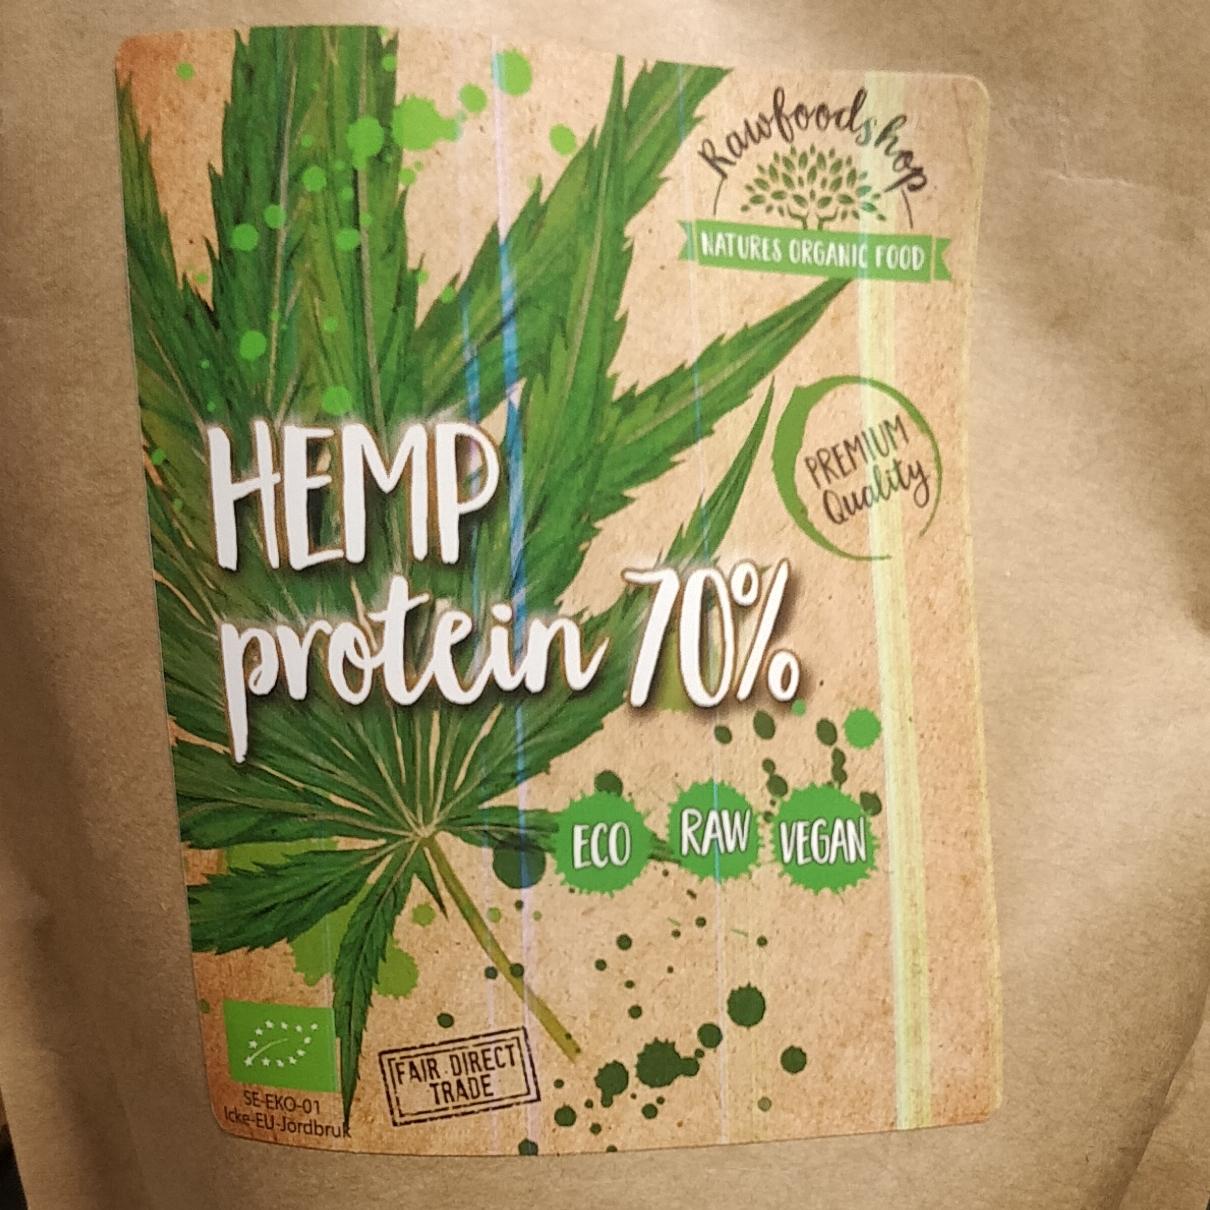 Fotografie - hemp protein 70% Rawfood shop